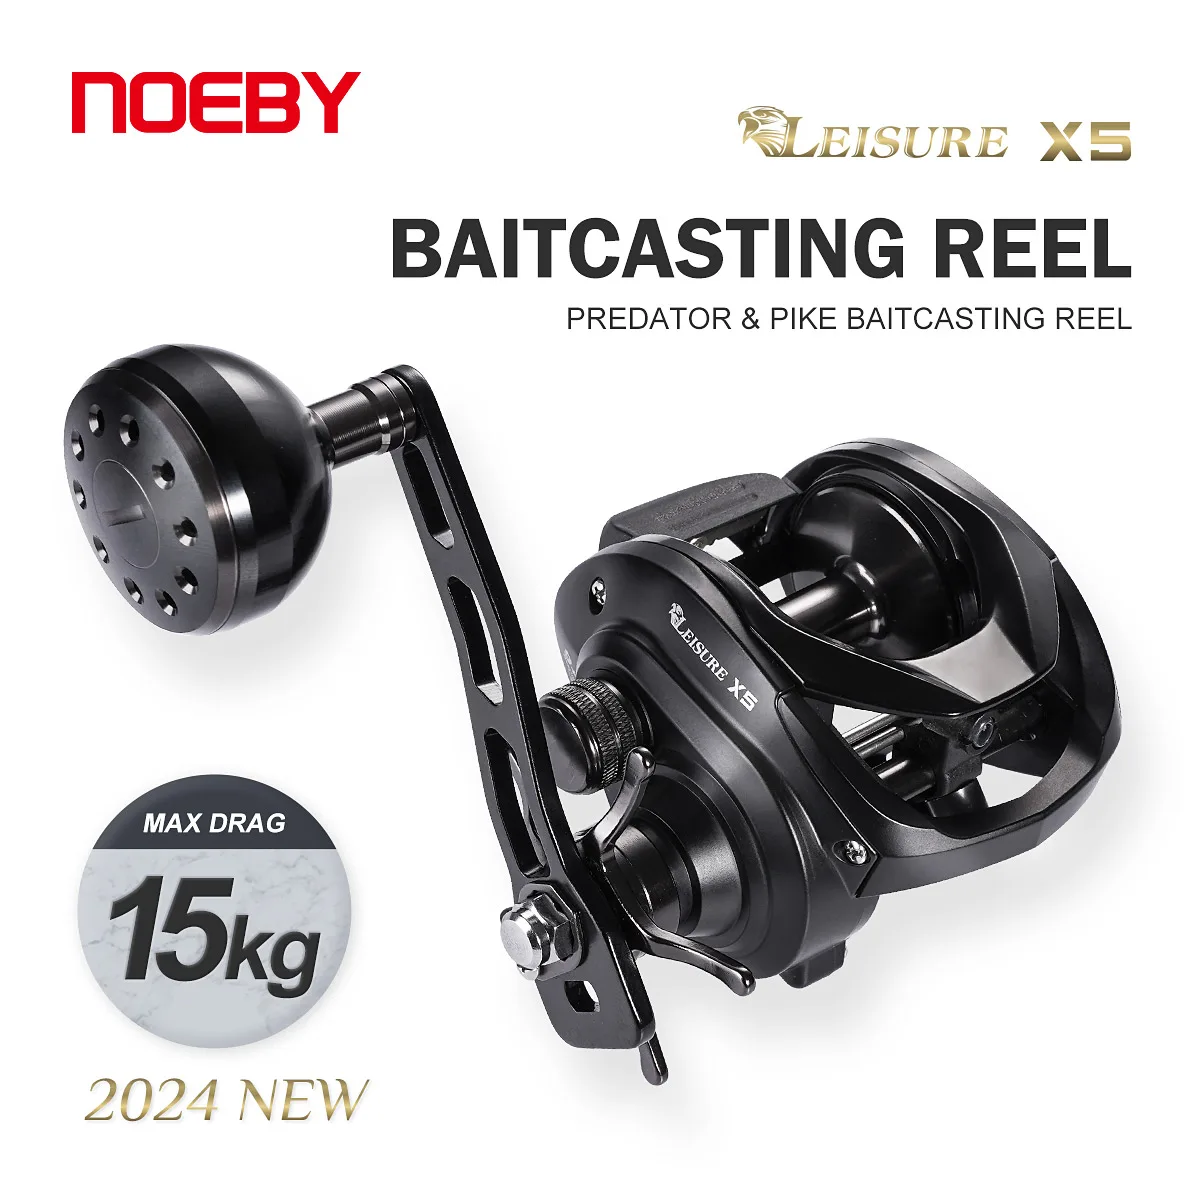 

NOEBY Leisure X5 Baitcasting Reel Aluminum Frame Fishing Reel 6.4:1 Gear Ratio 15kg Max Drag Saltwater Baitcast Reel for Pike